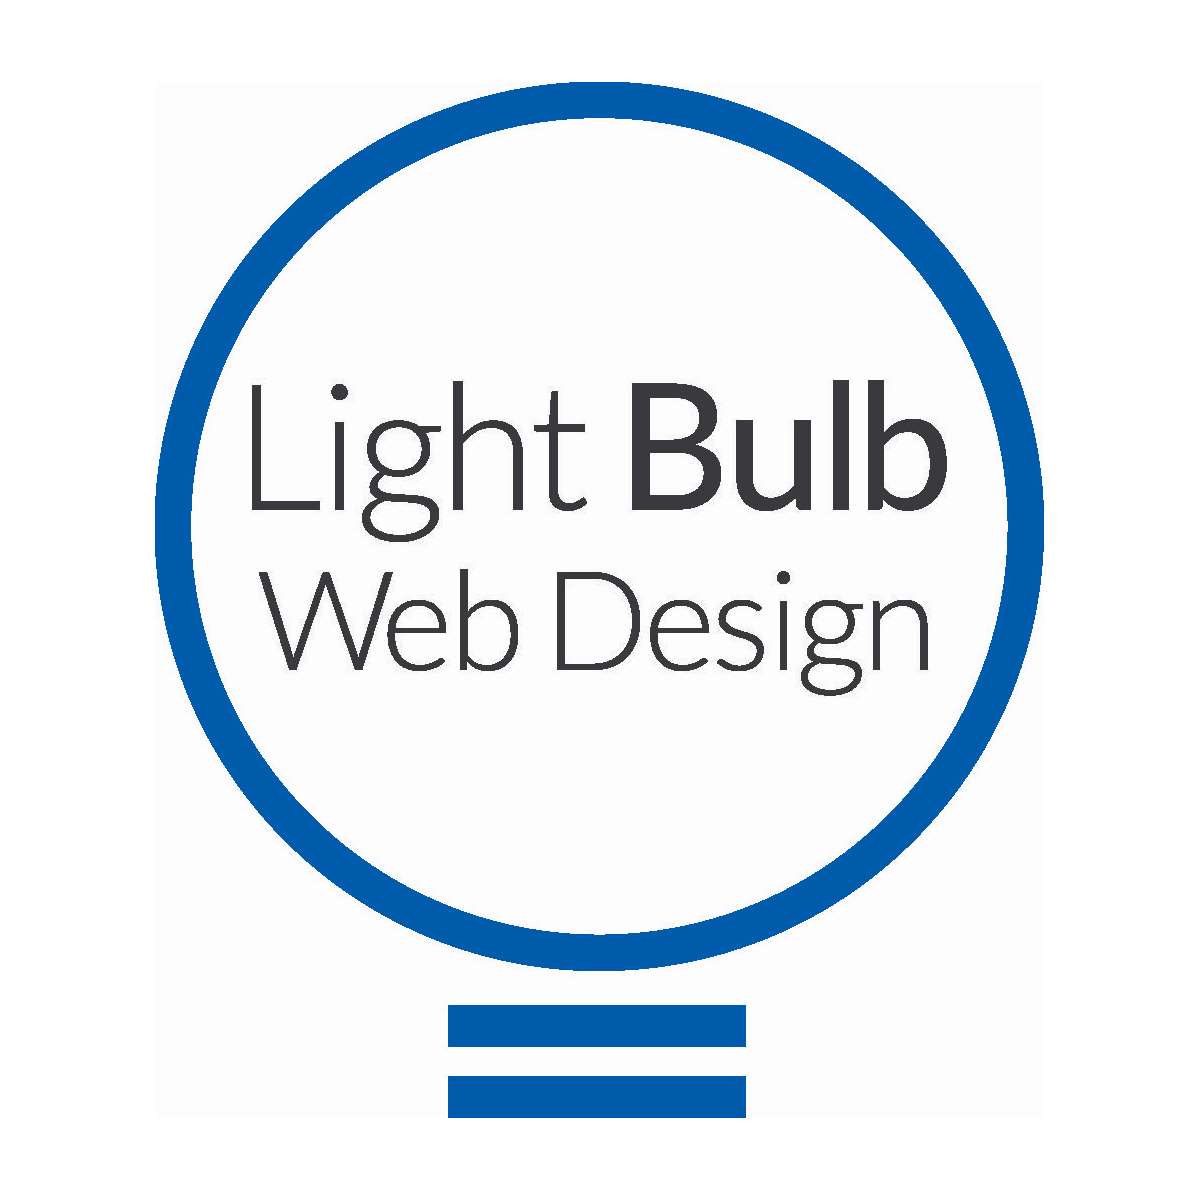 Light Bulb Web Design Ltd